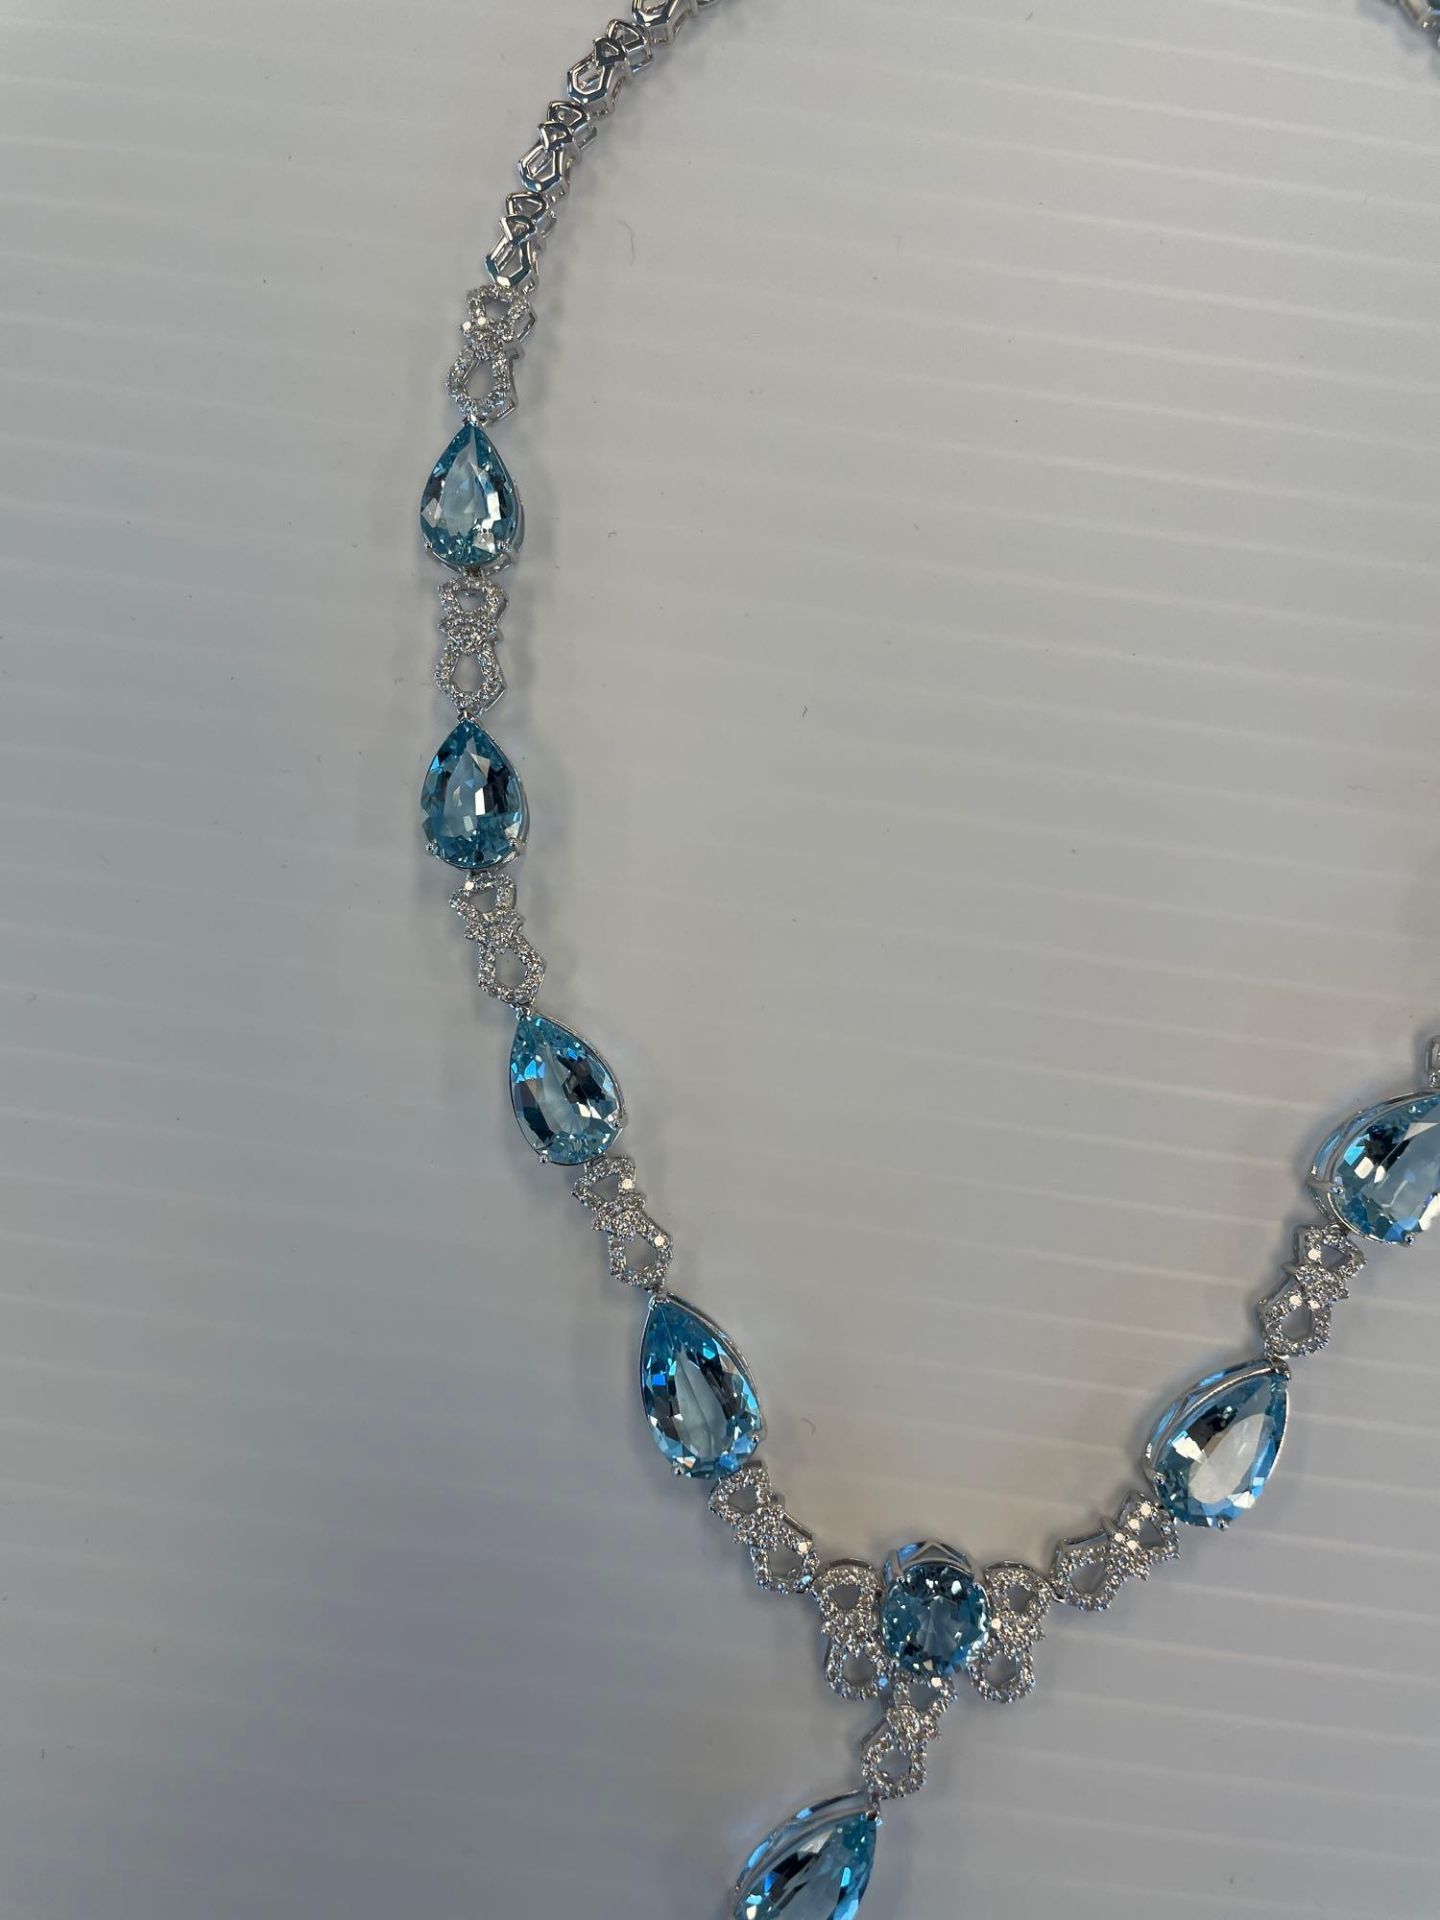 14kt white gold 37.99 ctw aquamarine beryl and 3.09 ctw diamond necklace - Image 3 of 7